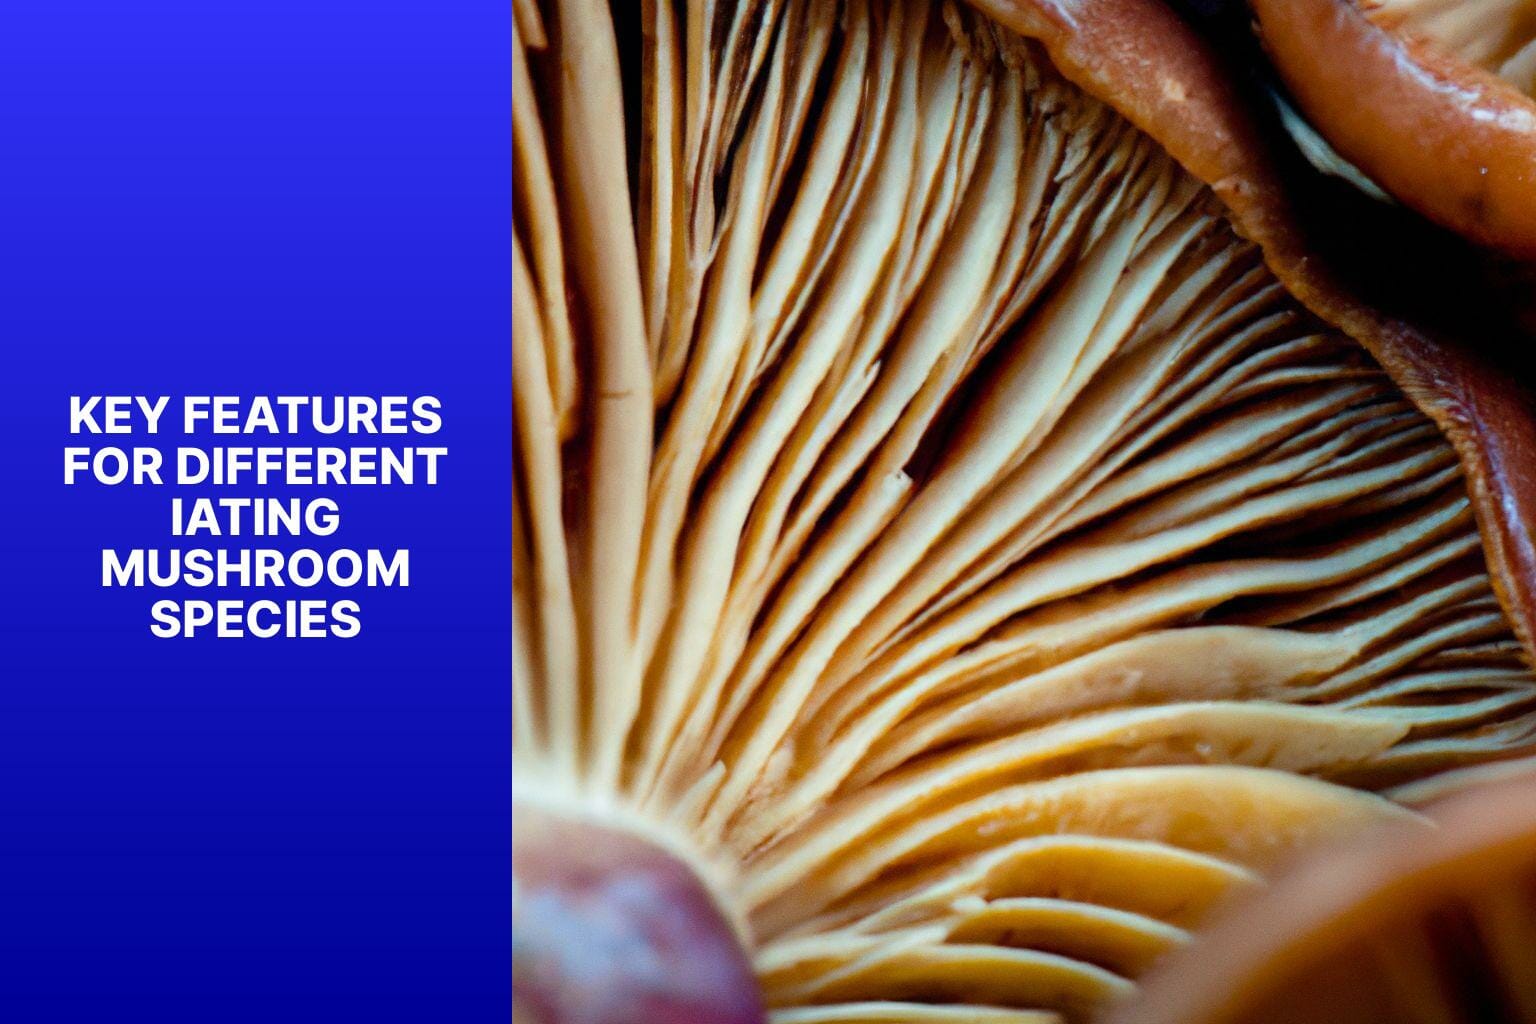 Key Features for Differentiating Mushroom Species - mushroom identification 